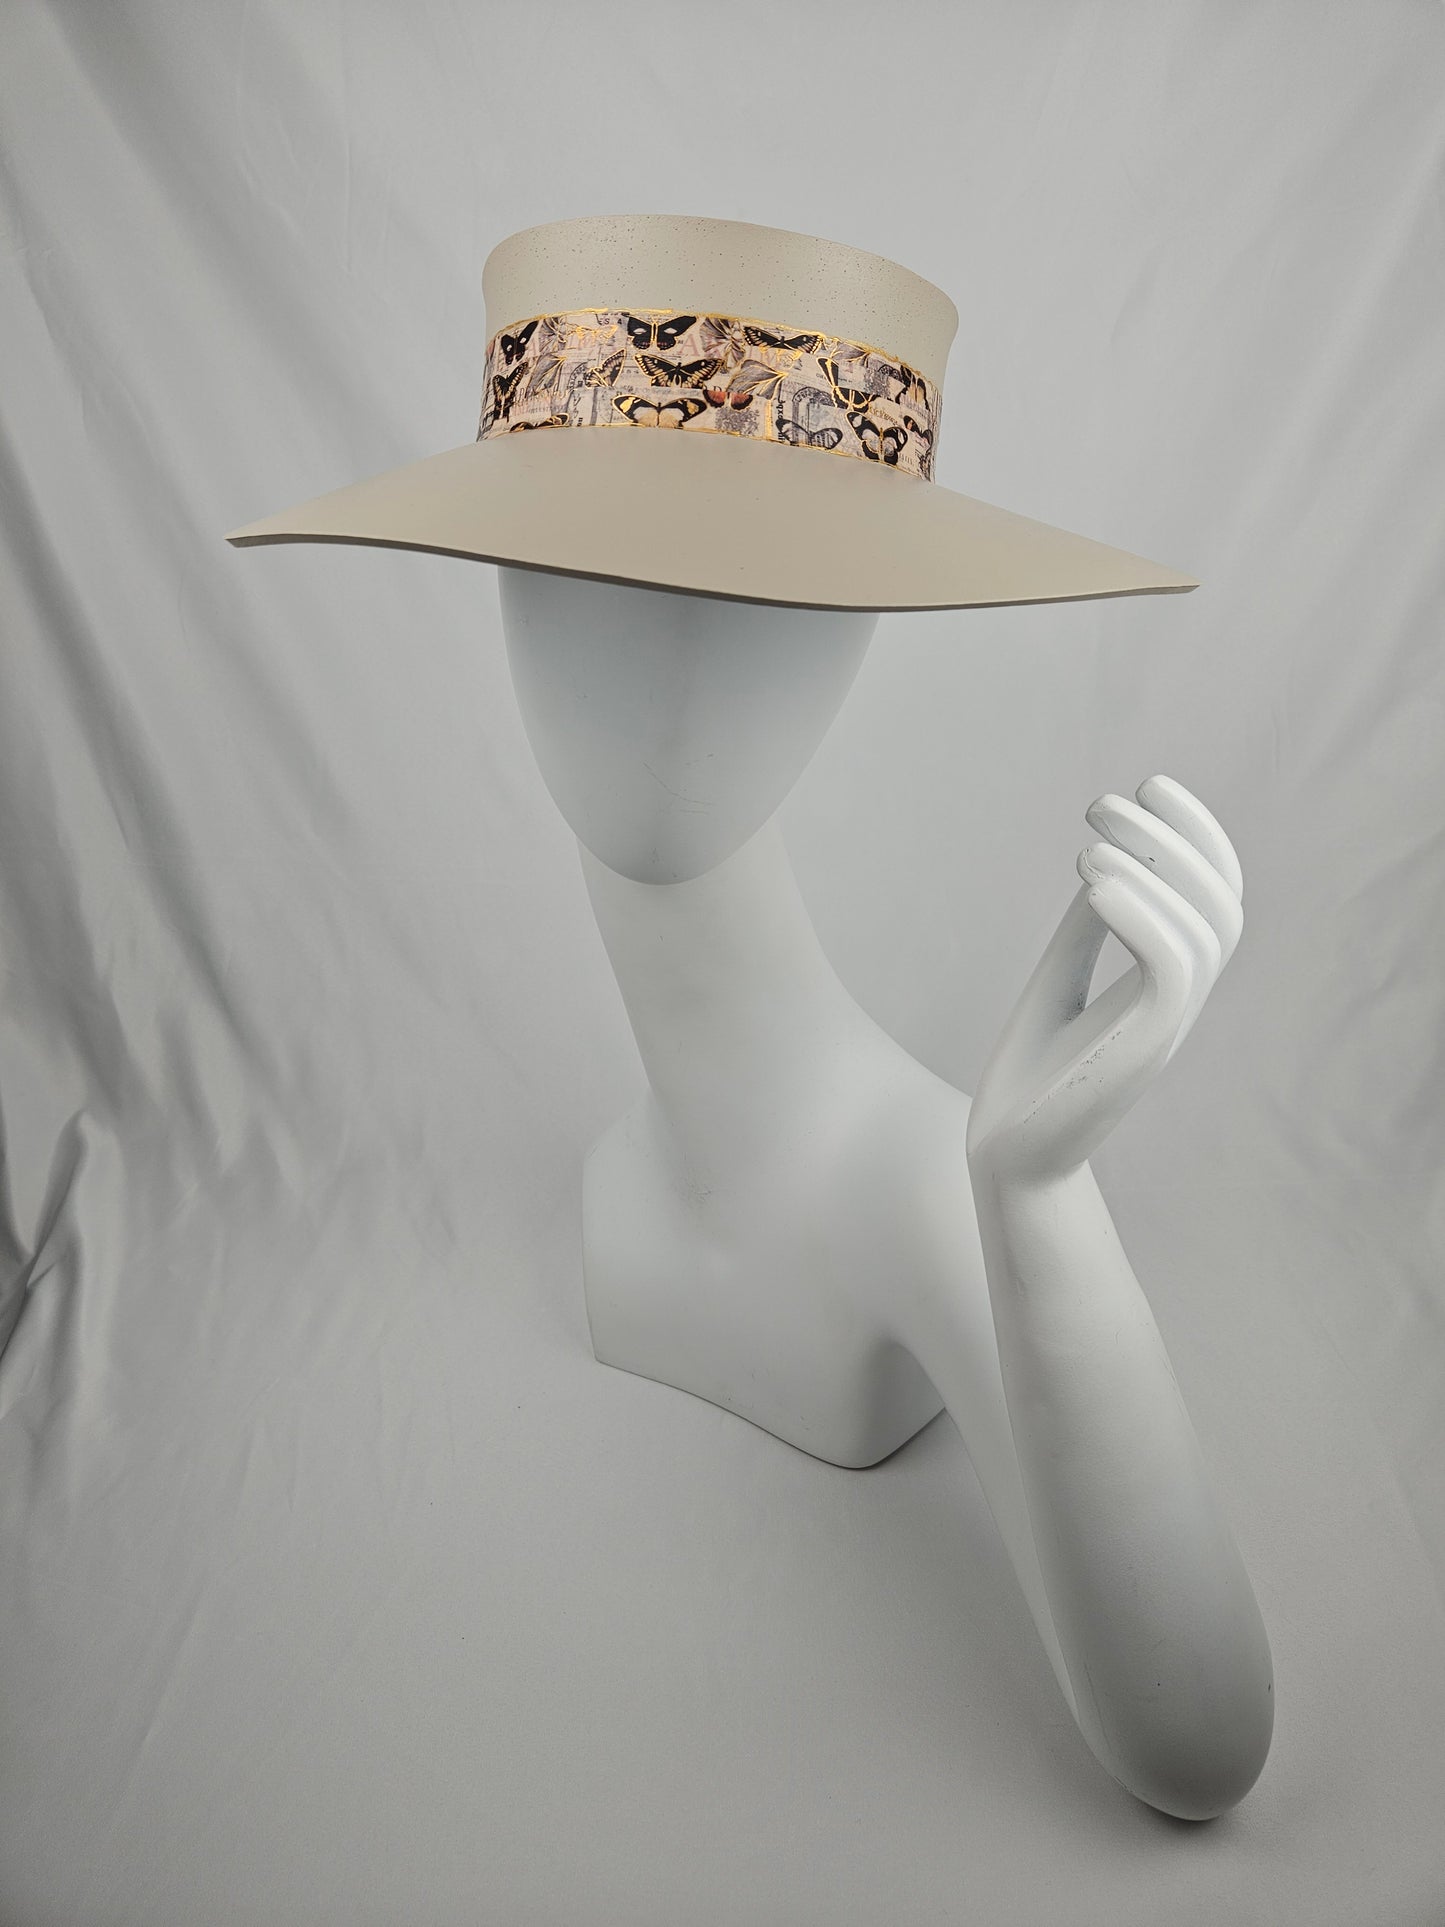 Truly Taupe Audrey Foam Sun Visor Hat with Pink Butterfly Band: Walks, Brunch, Swim, Garden, Golf, Easter, Church, No Headache